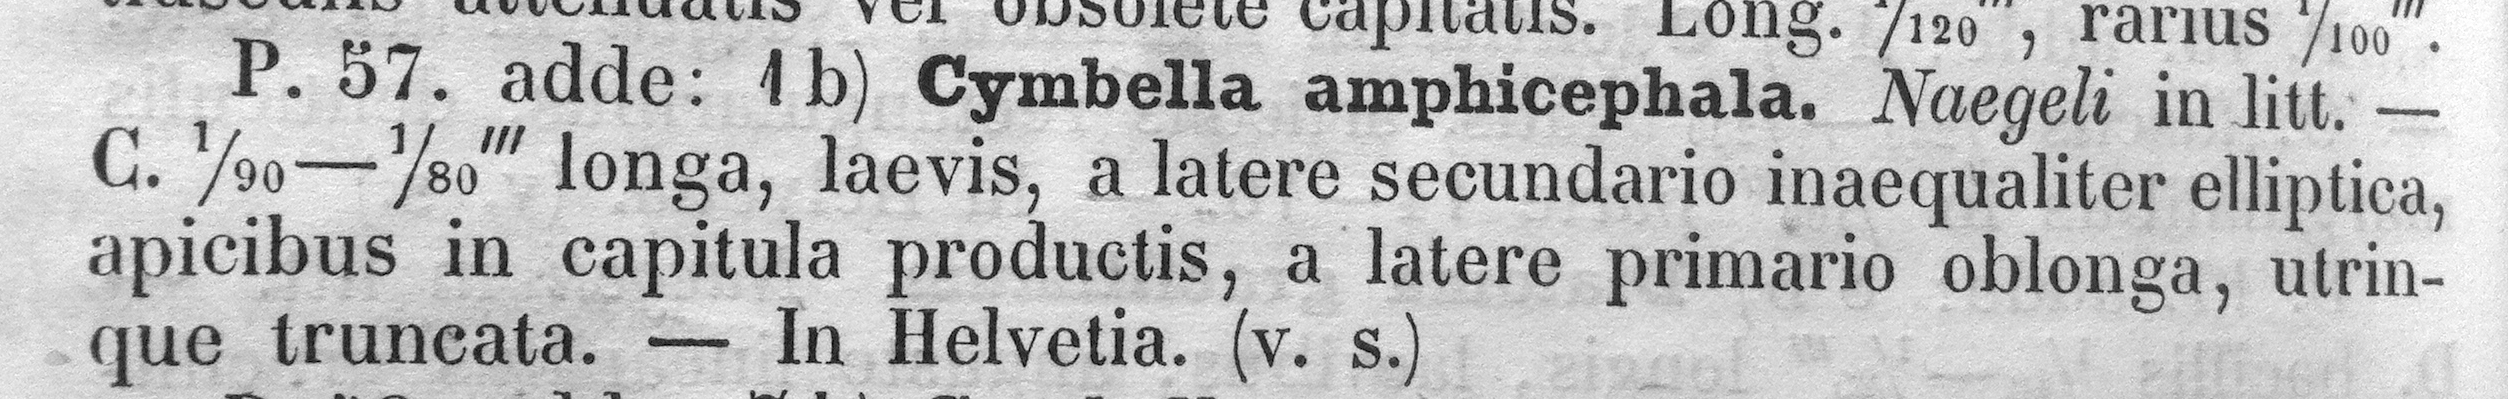 Cymbella amphicephala orig descr